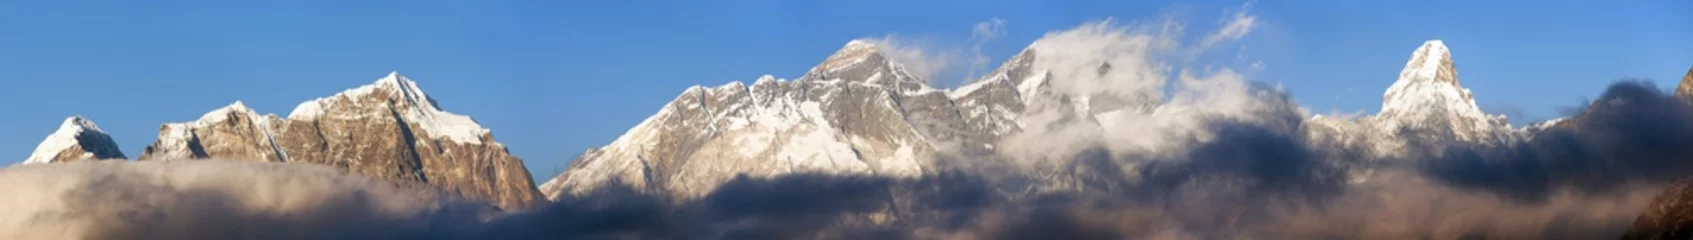 Cercles muraux Ama Dablam mount Everest, Lhotse and Ama Dablam panorama